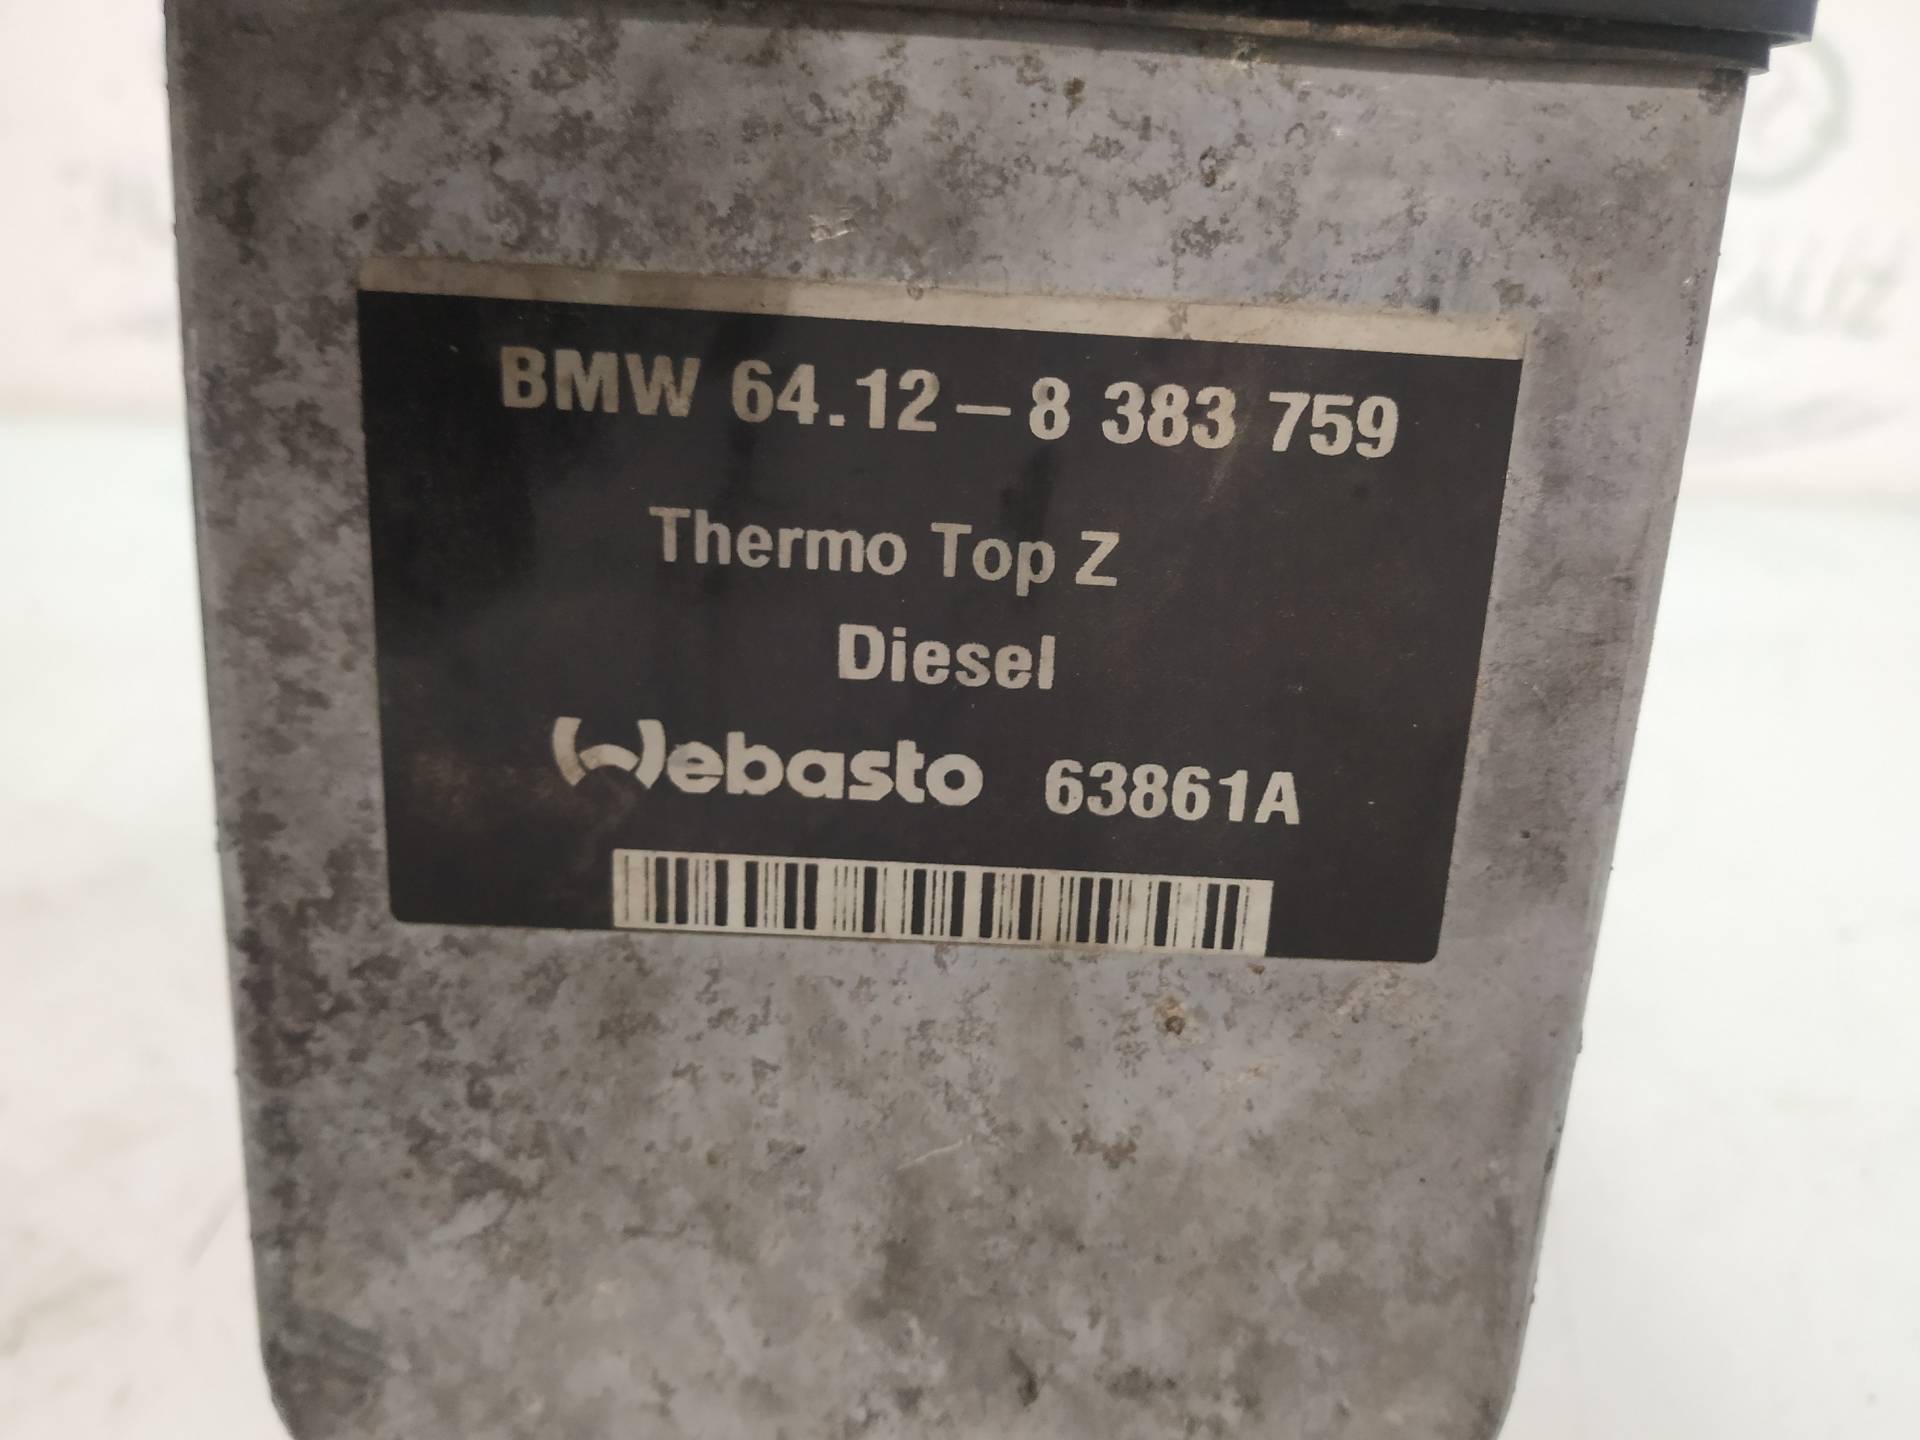 BMW 3 Series E46 (1997-2006) Interior Heater Flap Motor Actuator 64128383759 18991880